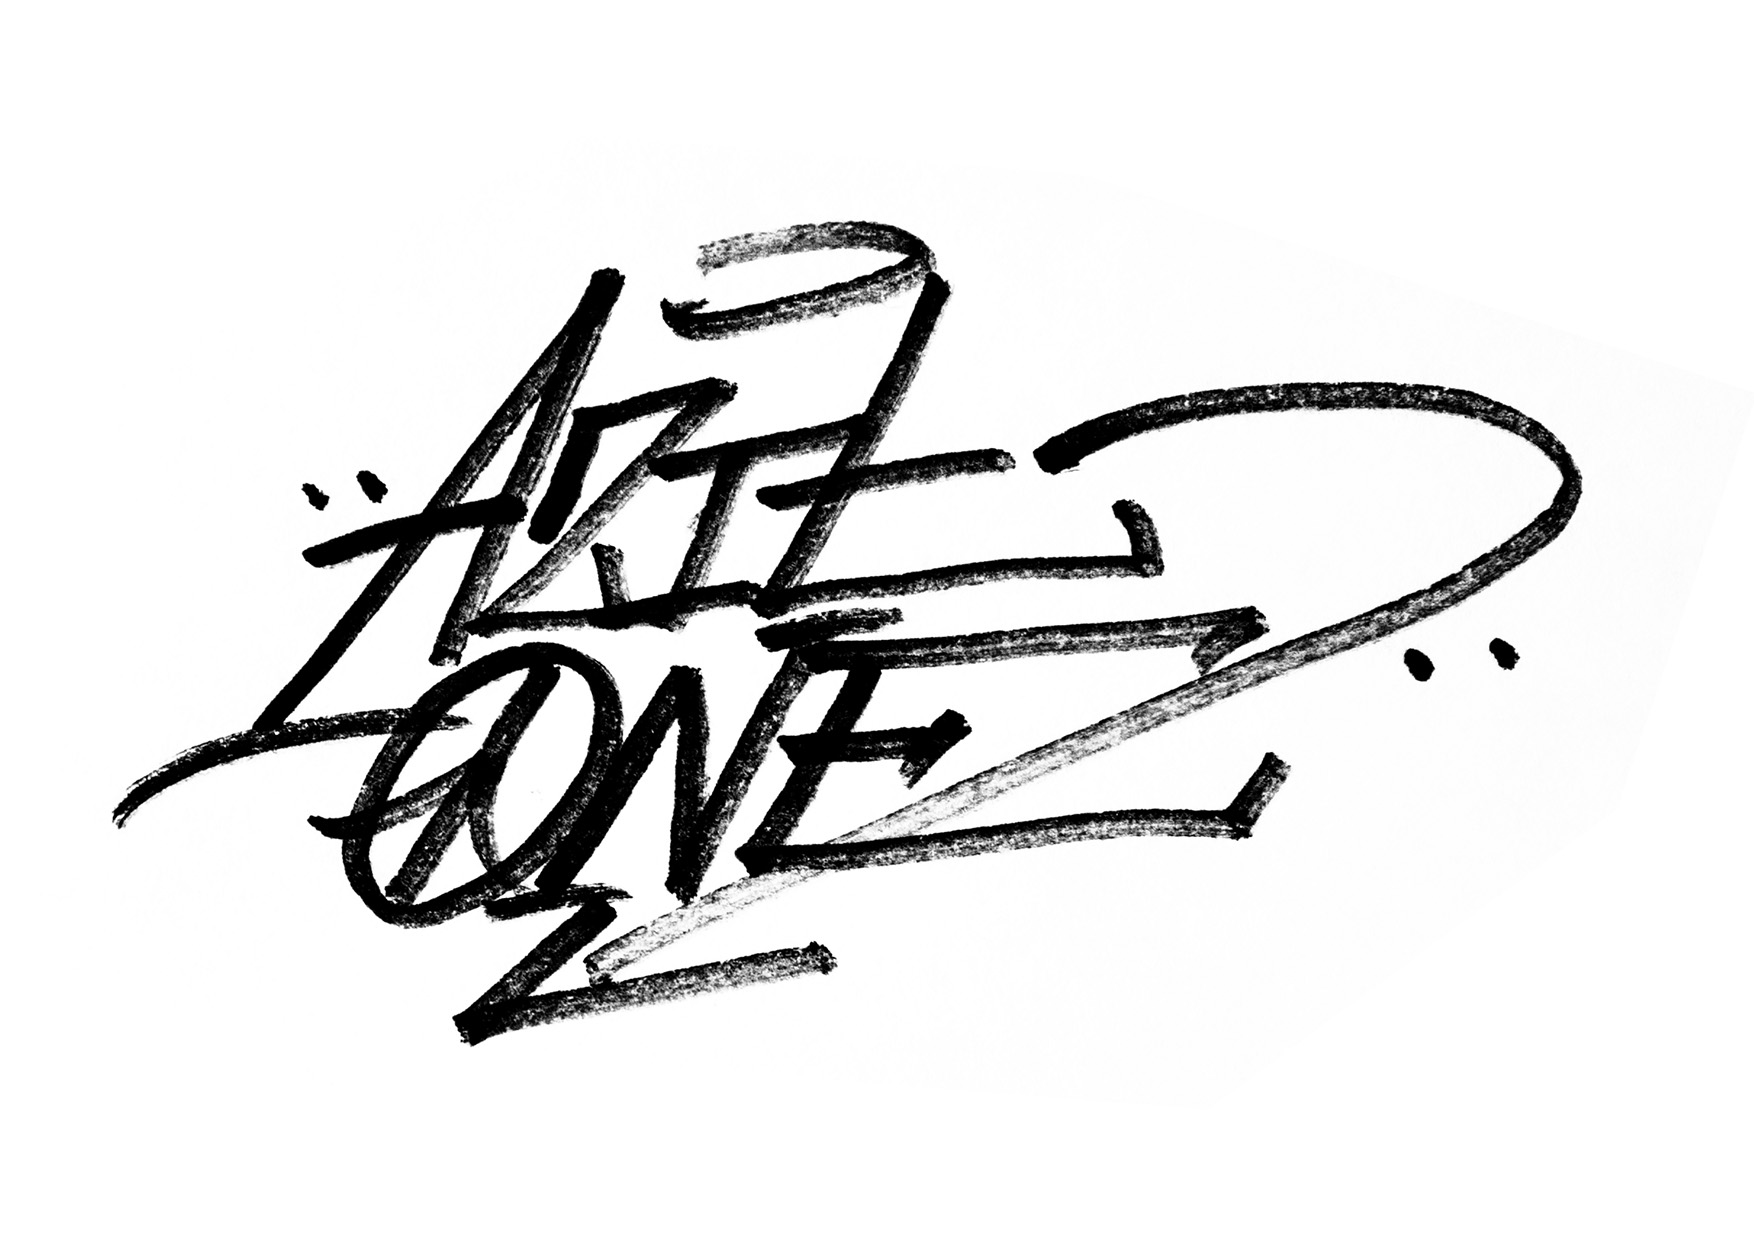 Graffiti Writer AZIT tag